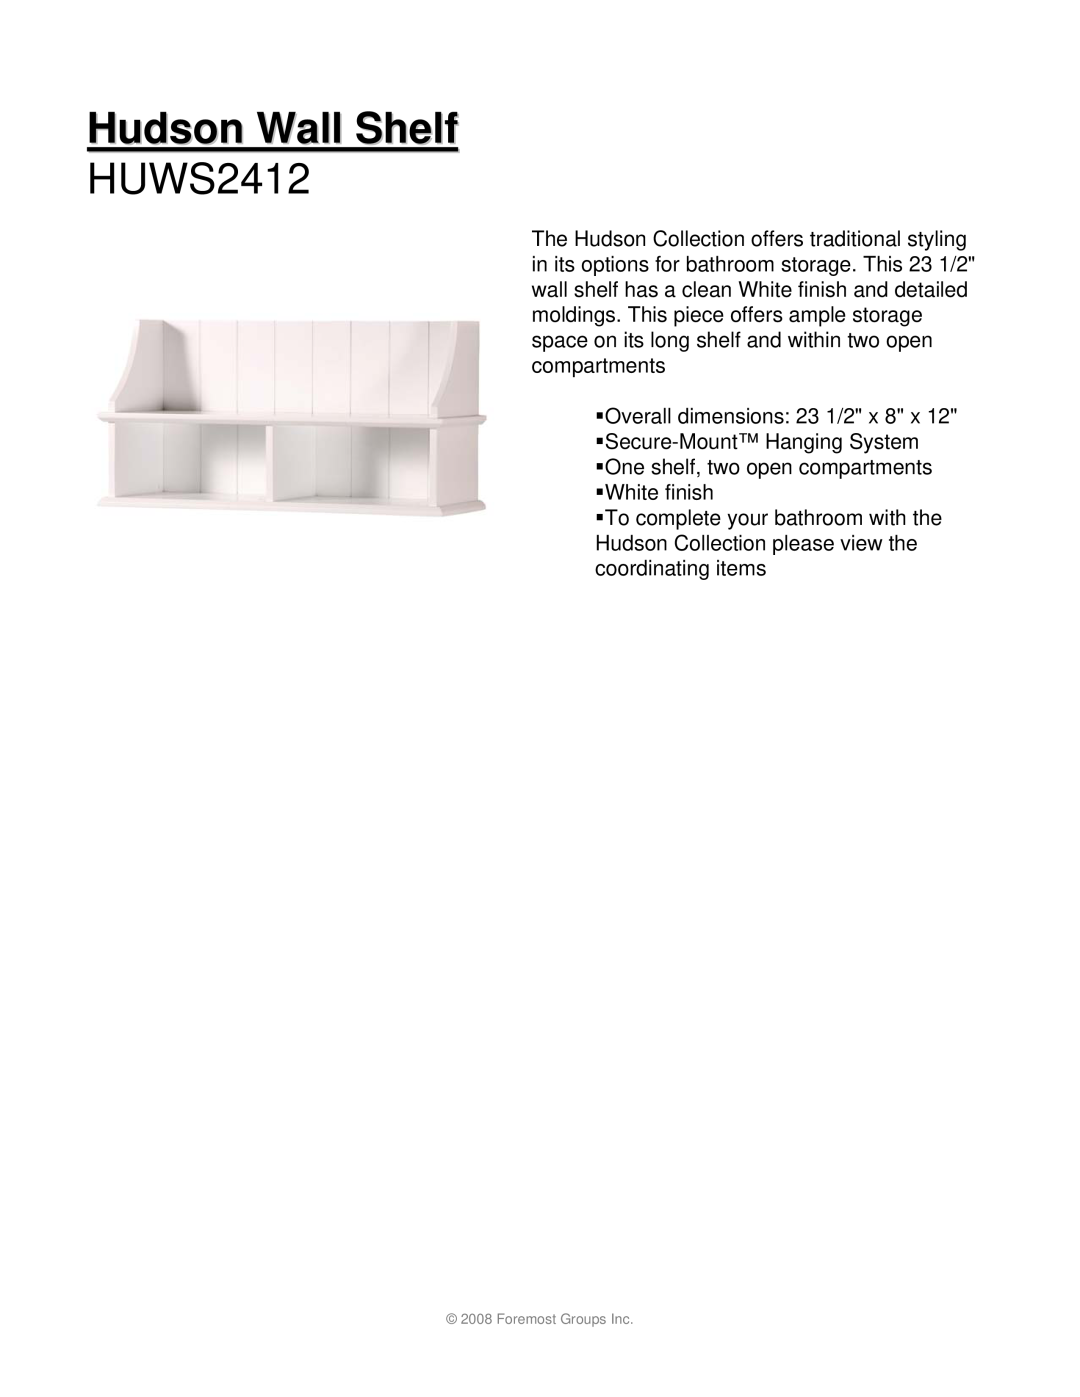 Hudson Sales & Engineering HUWF1534, HUWT2066, HUWW1828 dimensions Hudson Wall Shelf, HUWS2412 